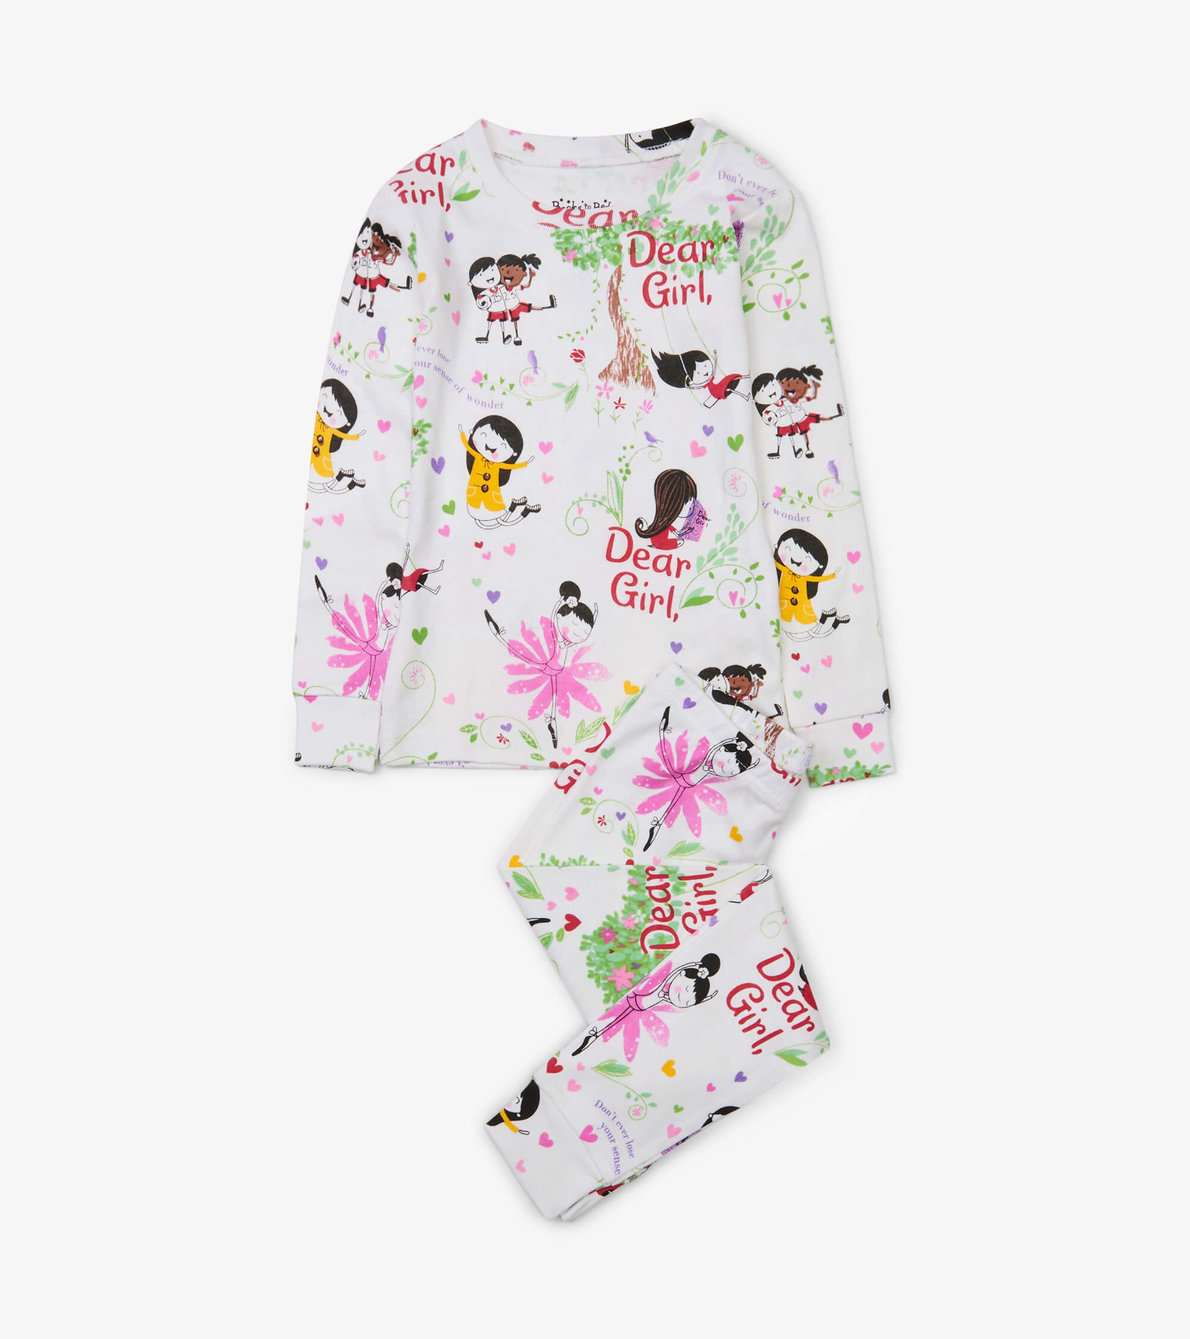 View larger image of Dear Girl Pajama Set